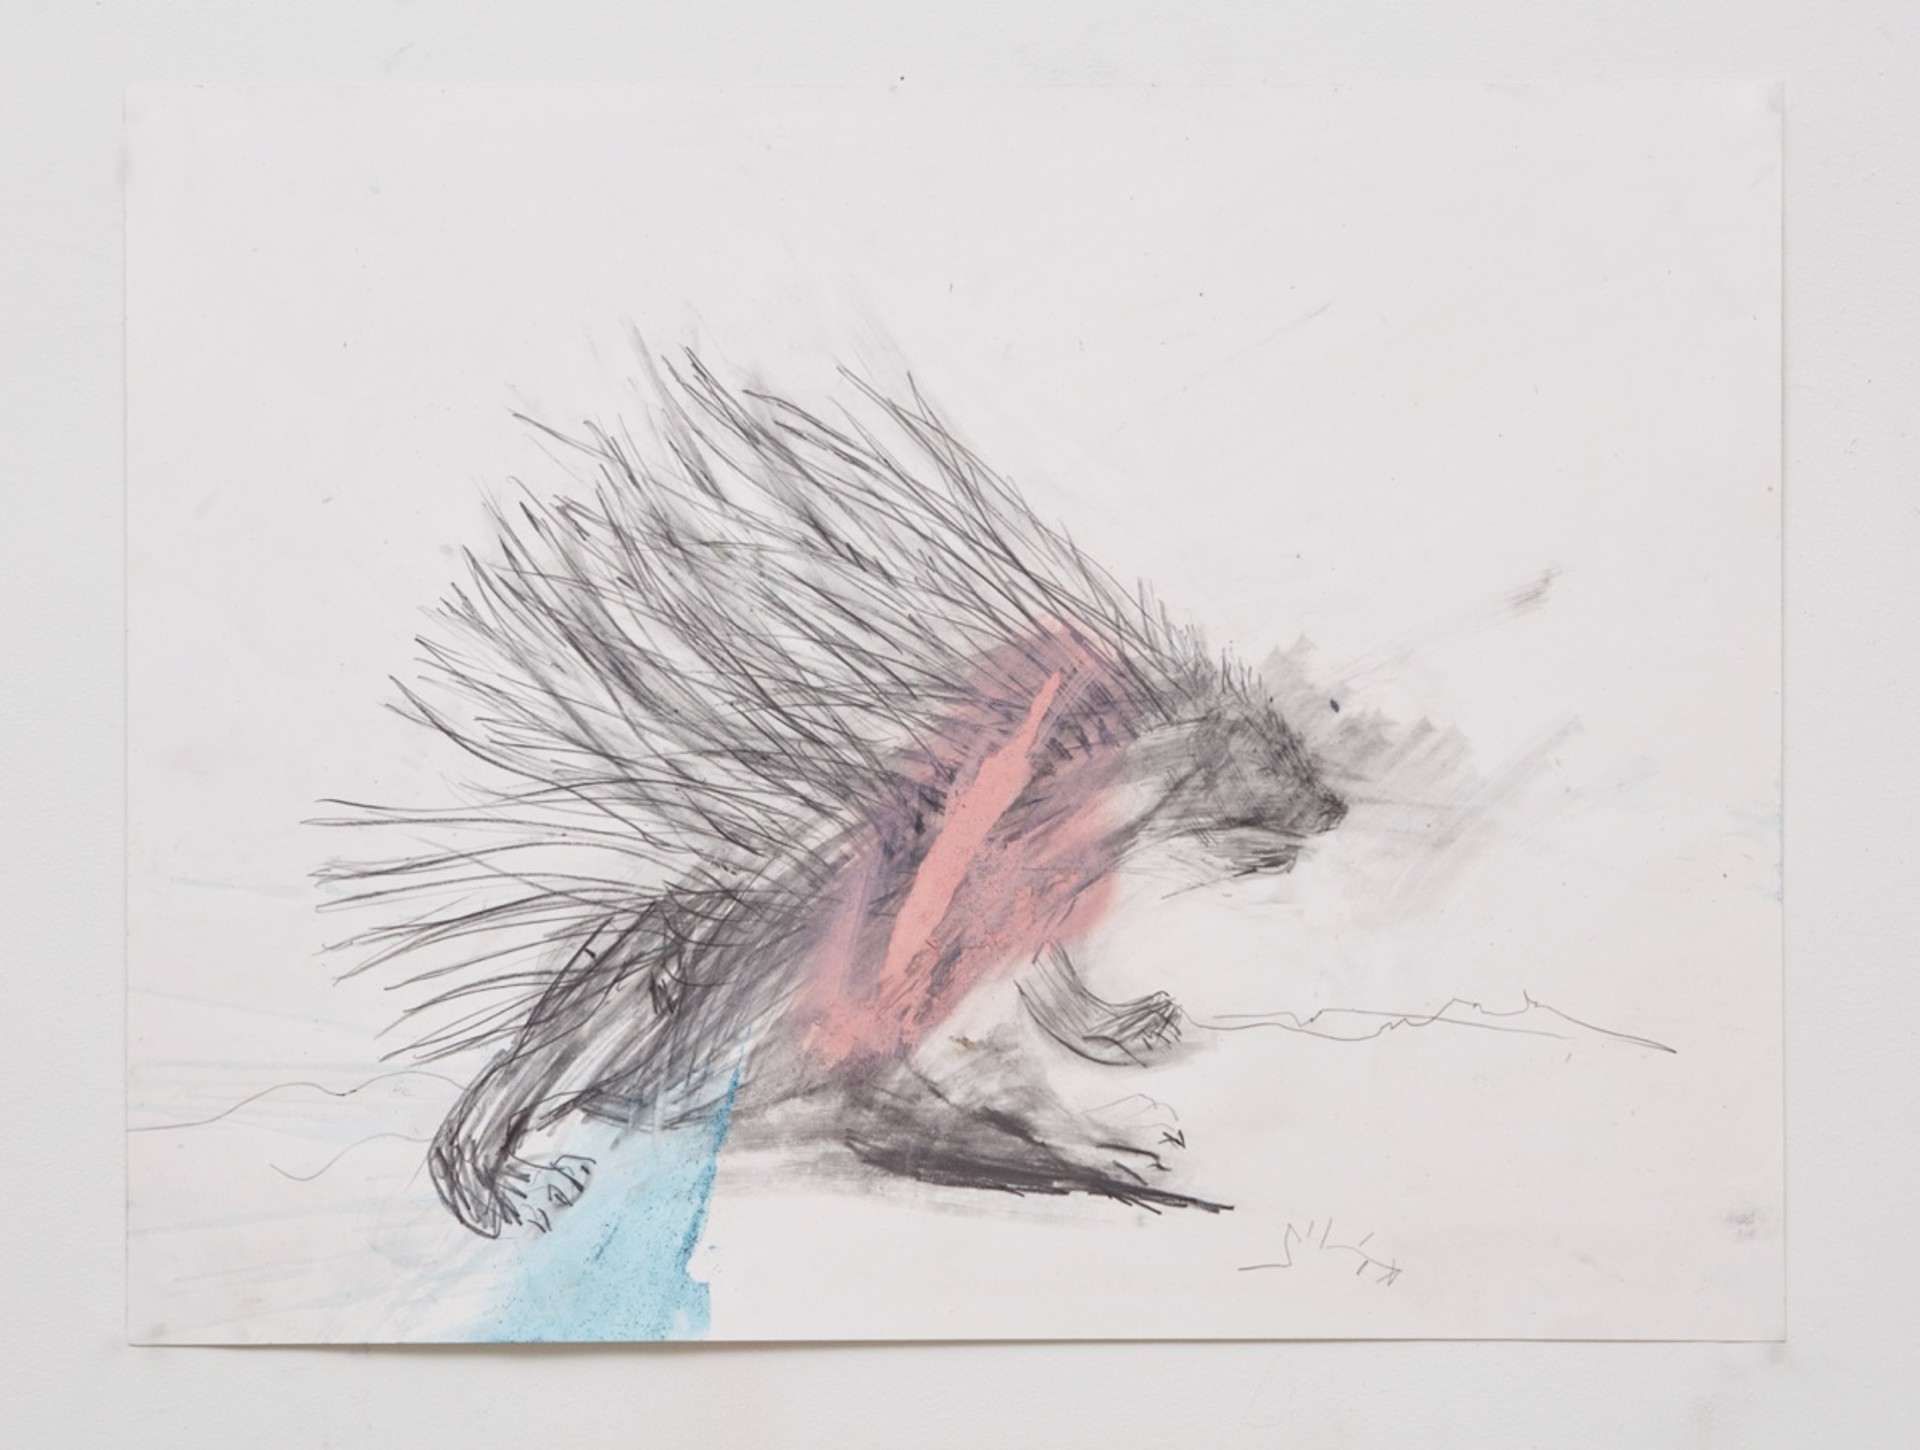 Powered Porcupine by Jeannie Weissglass